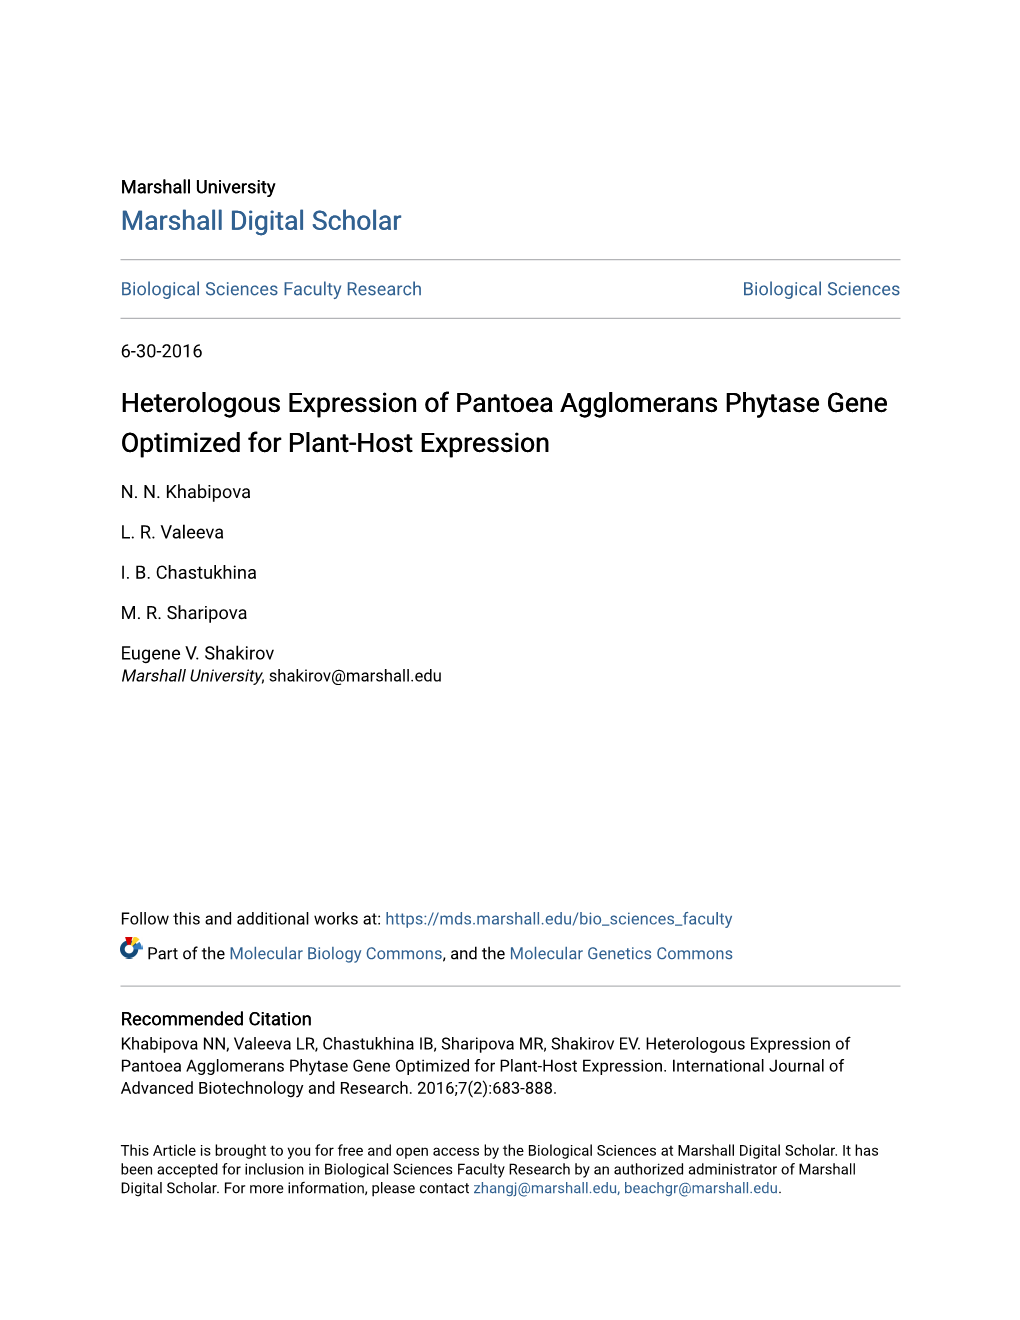 Heterologous Expression of Pantoea Agglomerans Phytase Gene Optimized for Plant-Host Expression